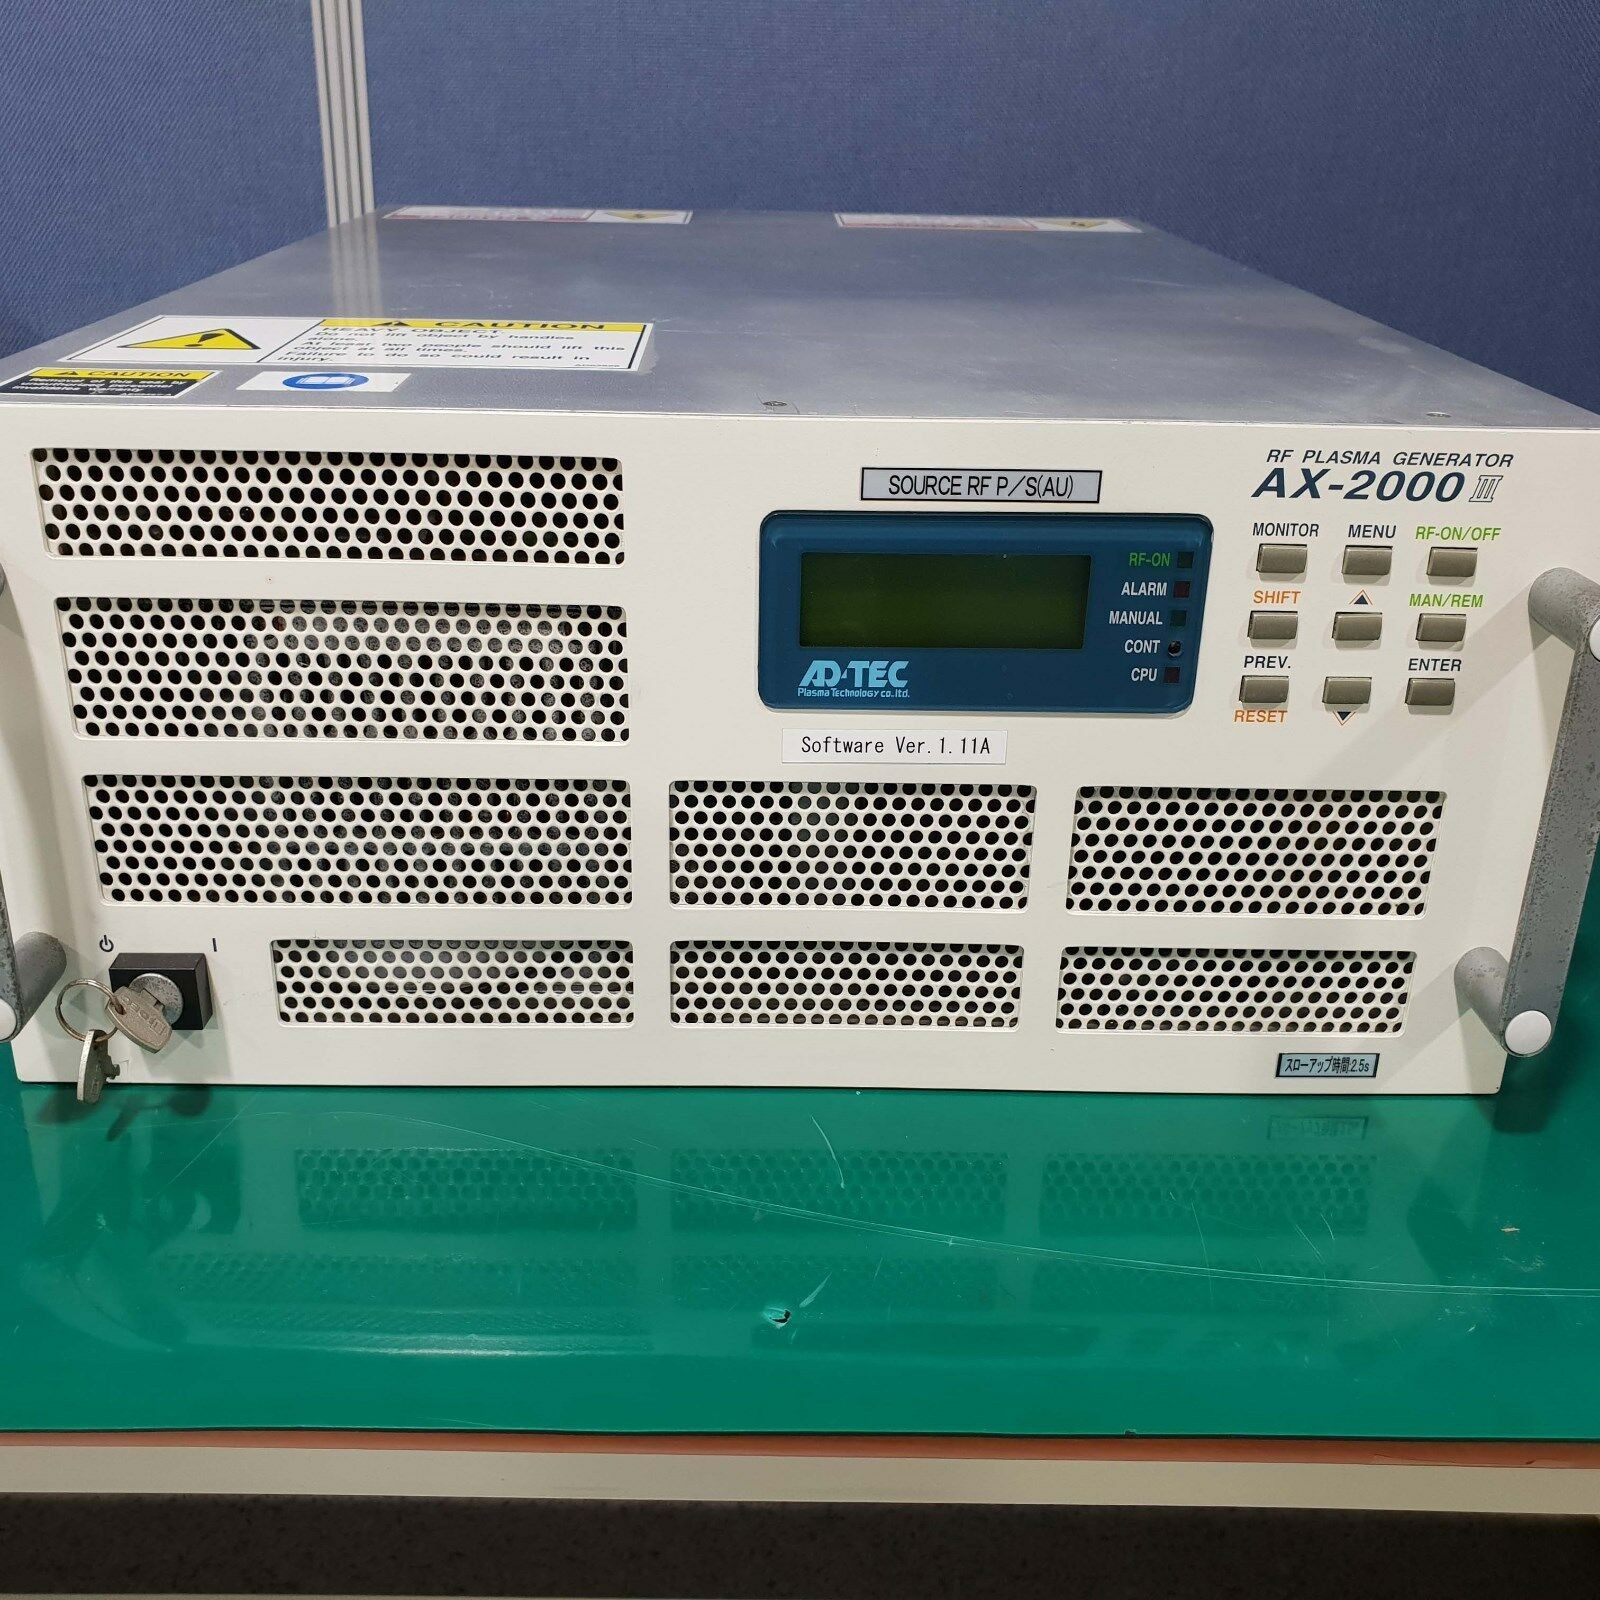 AD-TEC RF射频电源AX-2000III-H维修